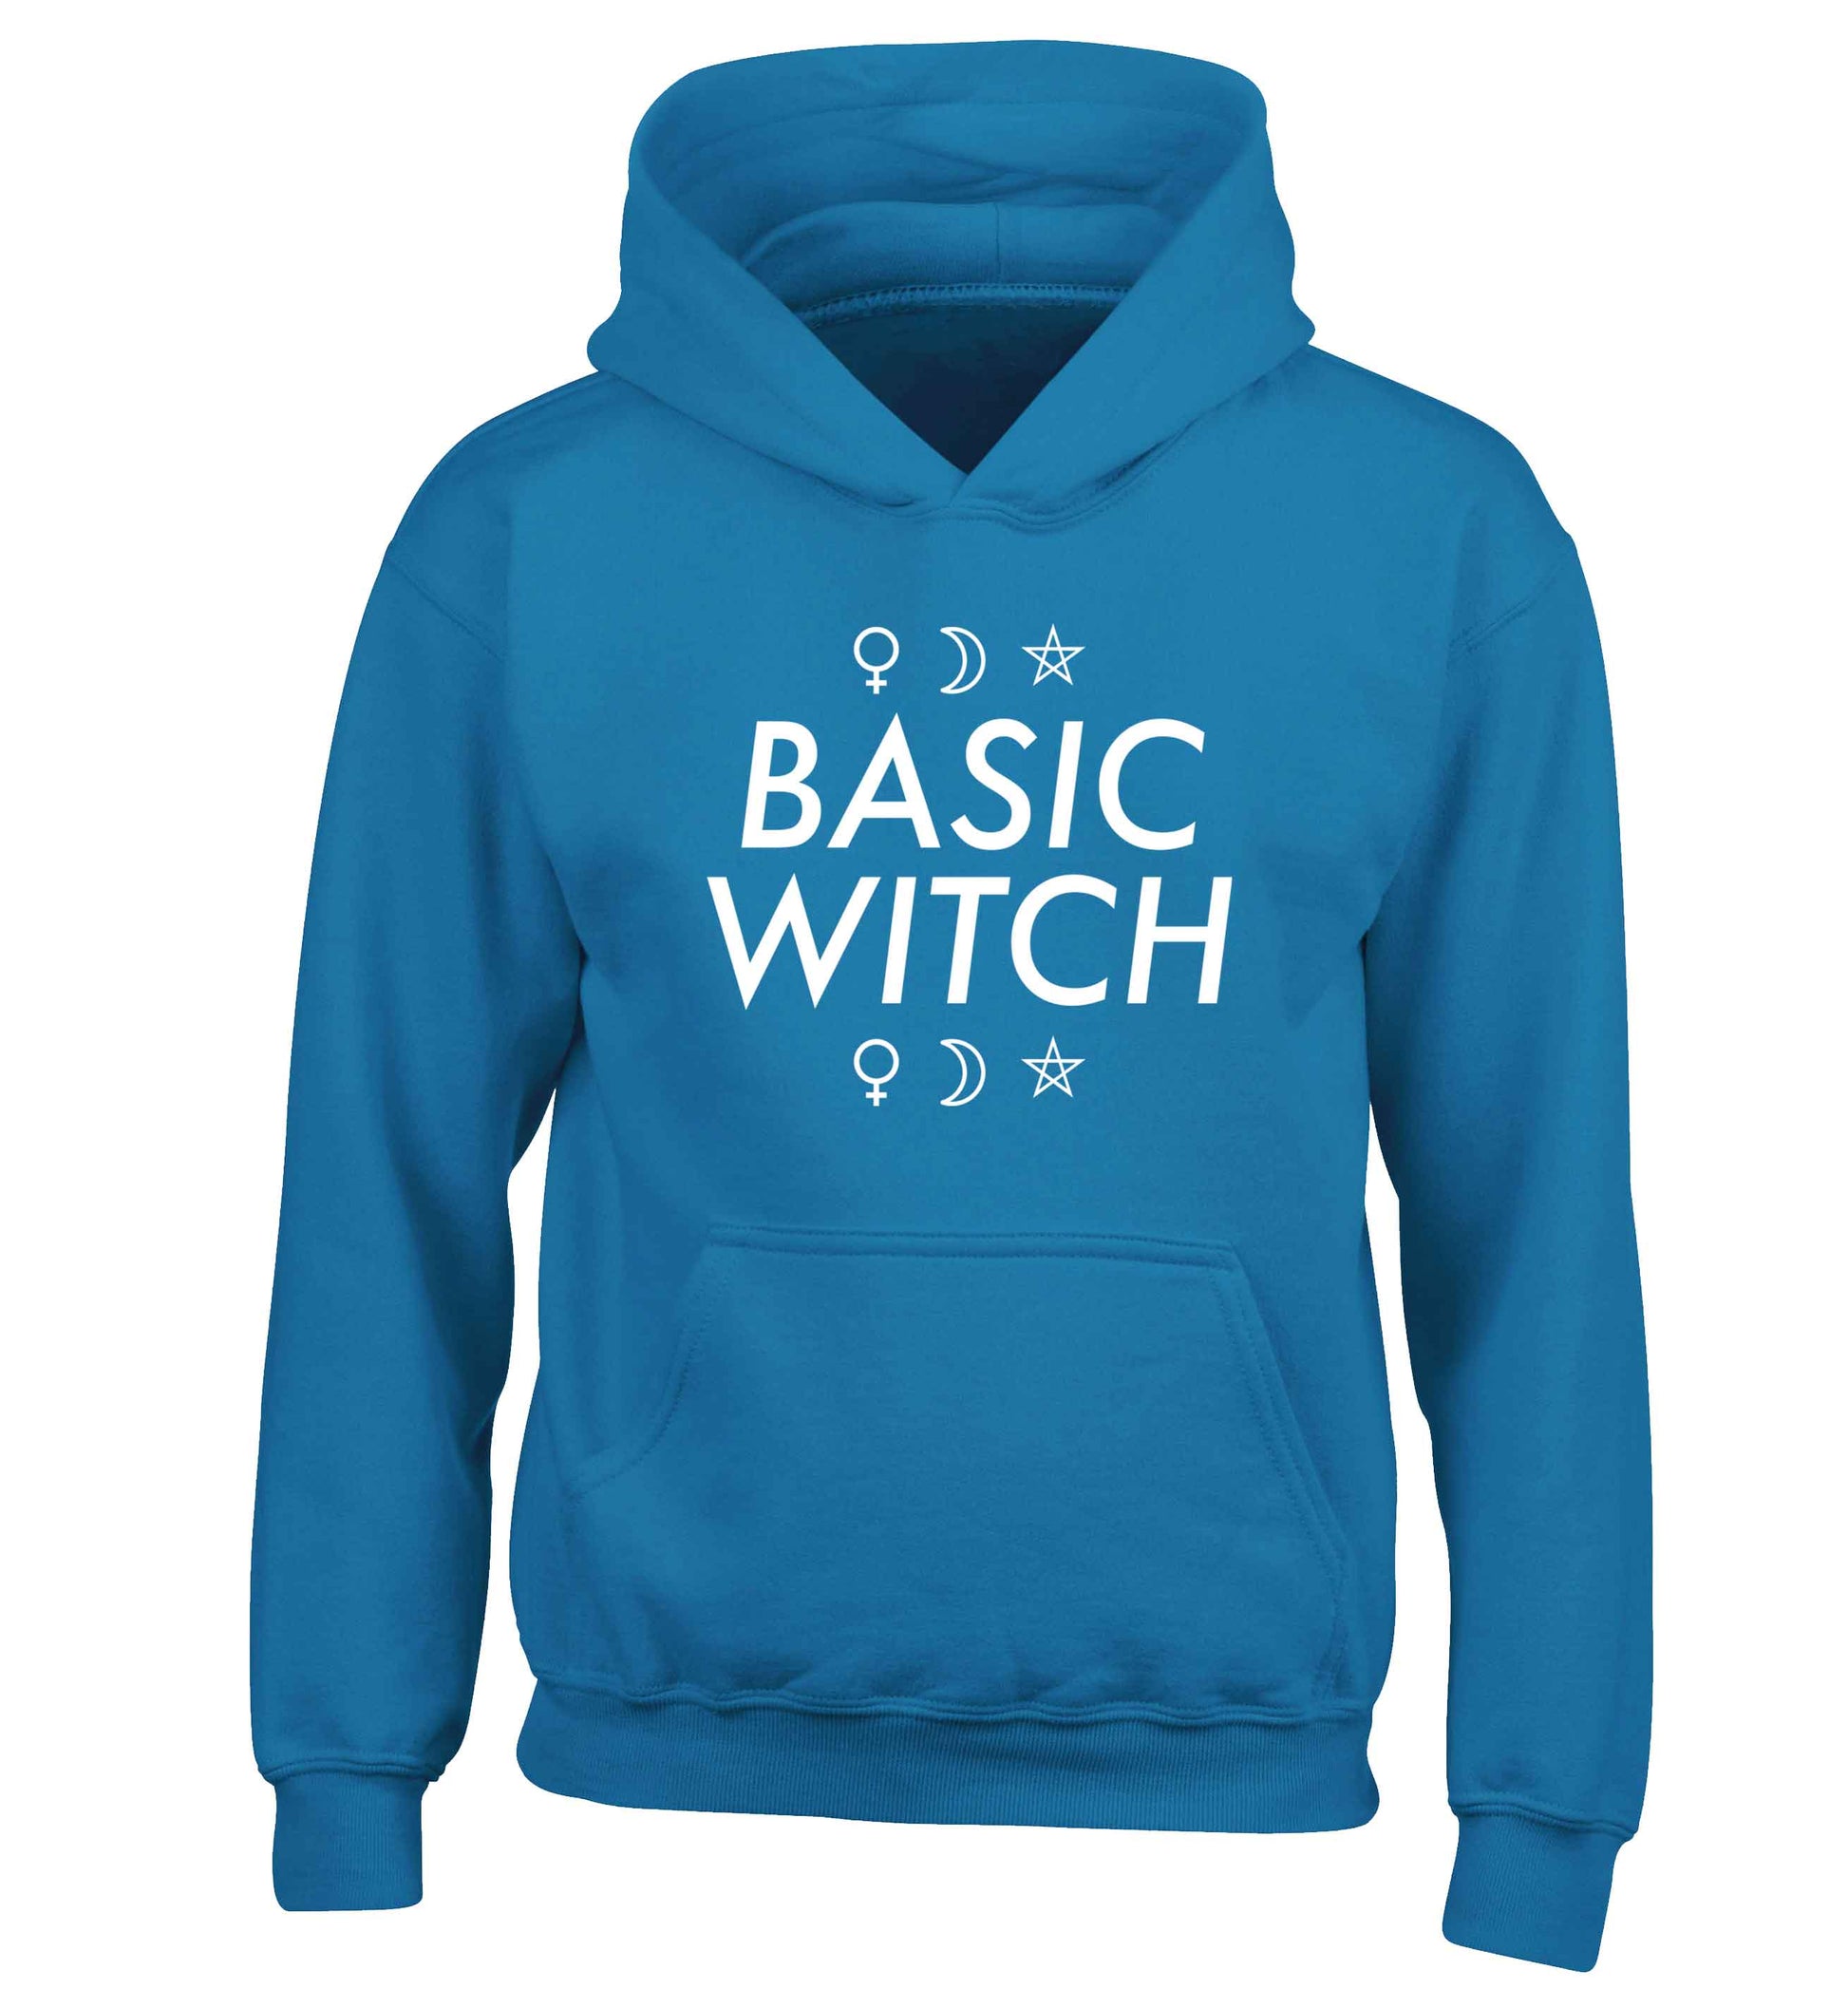 Basic witch 1 children's blue hoodie 12-13 Years